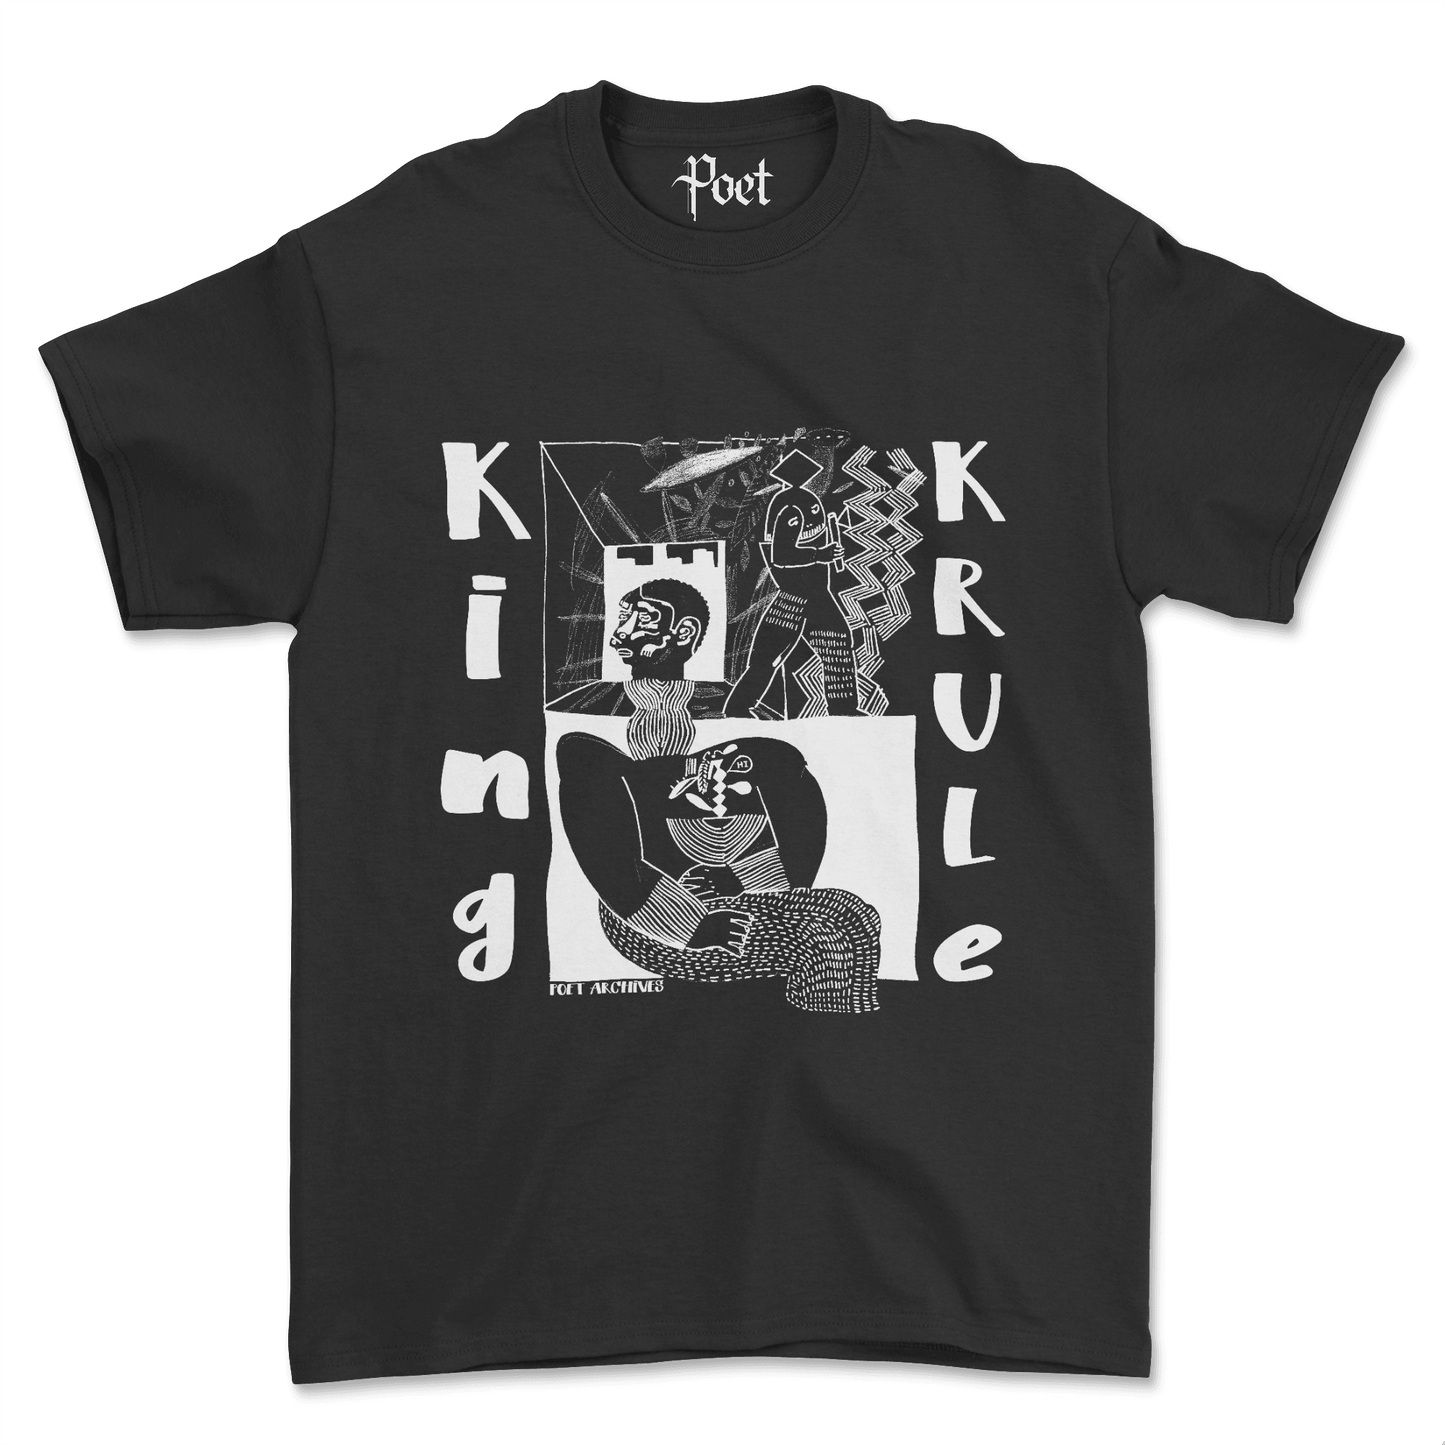 King Krule T-Shirt - Poet Archives